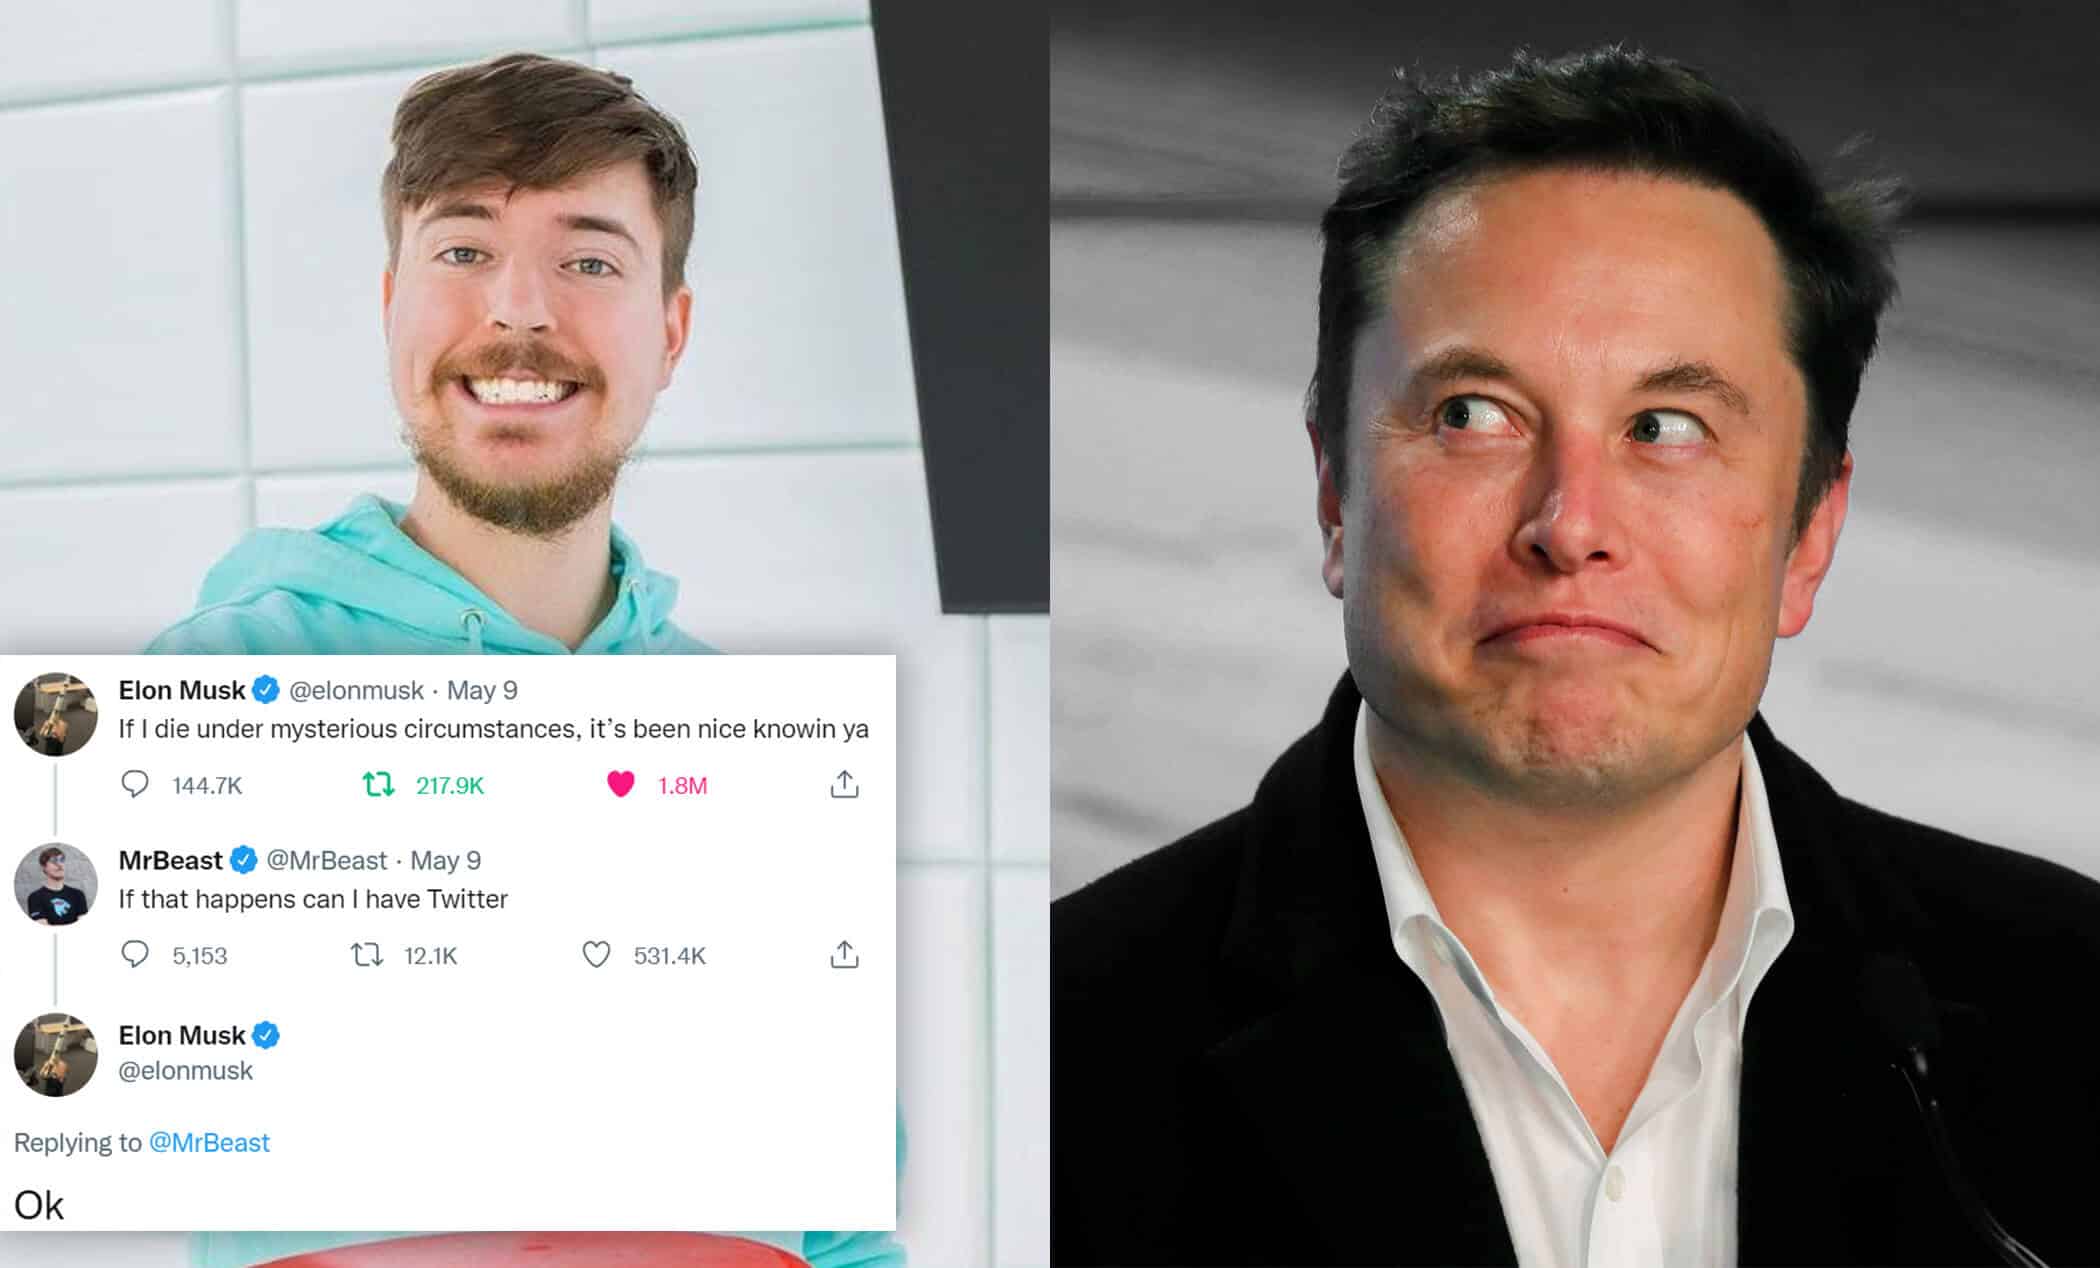 MrBeast Twitter CEO: World's Most Popular r Asks If He Can Be  Twitter CEO. Elon Musk Responds